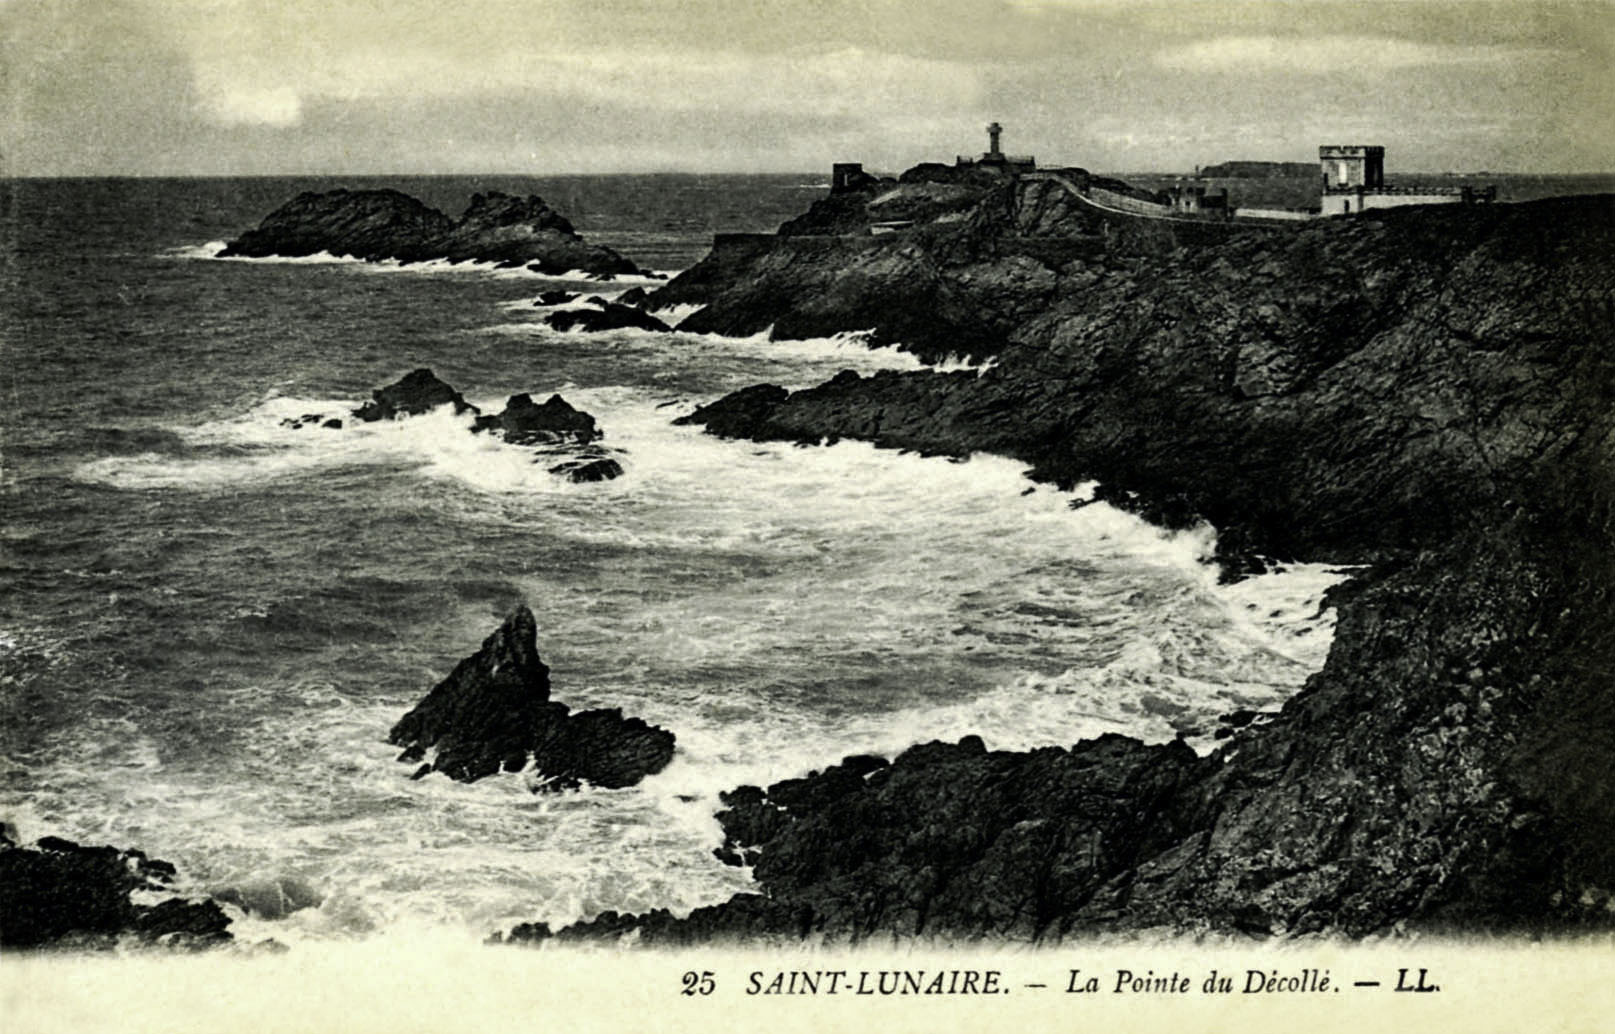 Brittany Region